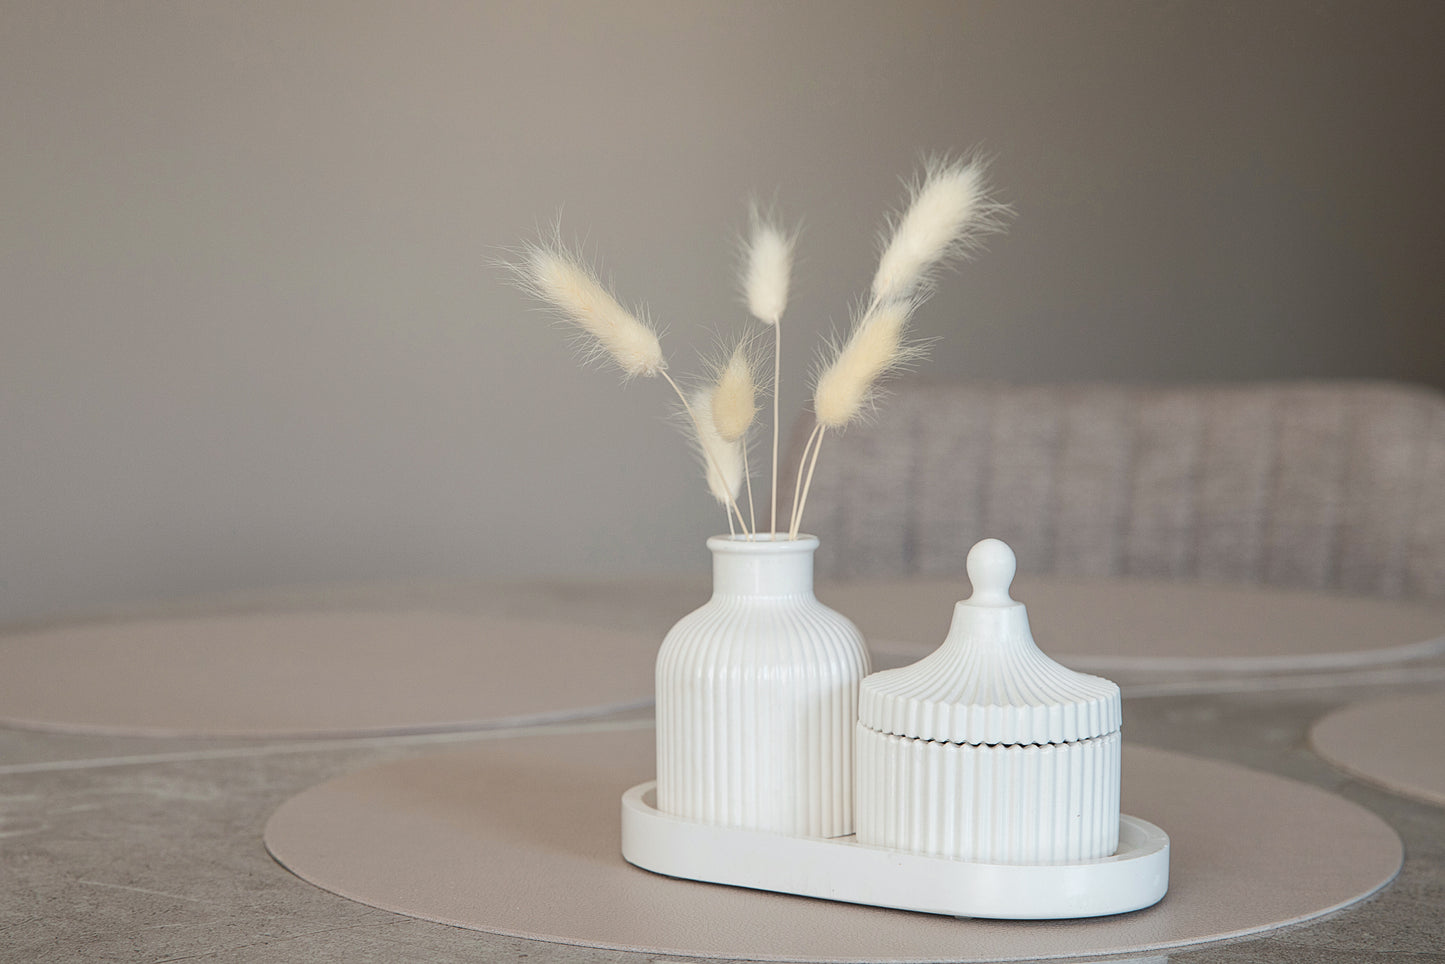 Modern Gypsum Vase for Dry Flowers - Perfect Housewarming Gift - Size: 7cm x 7cm x 9cm